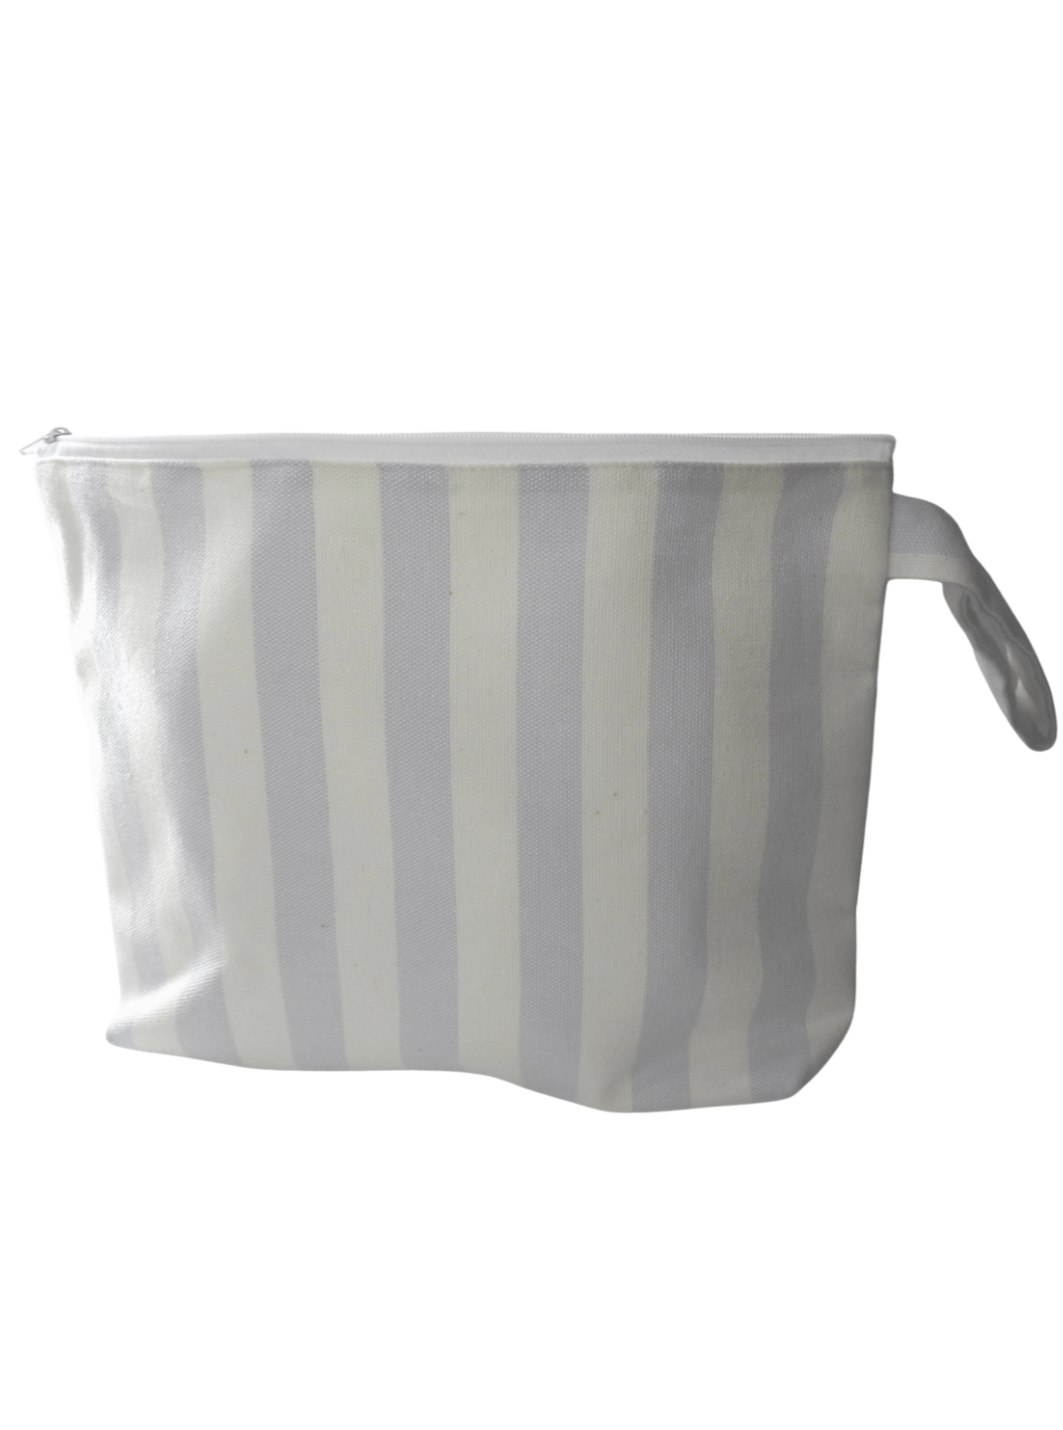 Swimwear Bag - Lilac Stripes